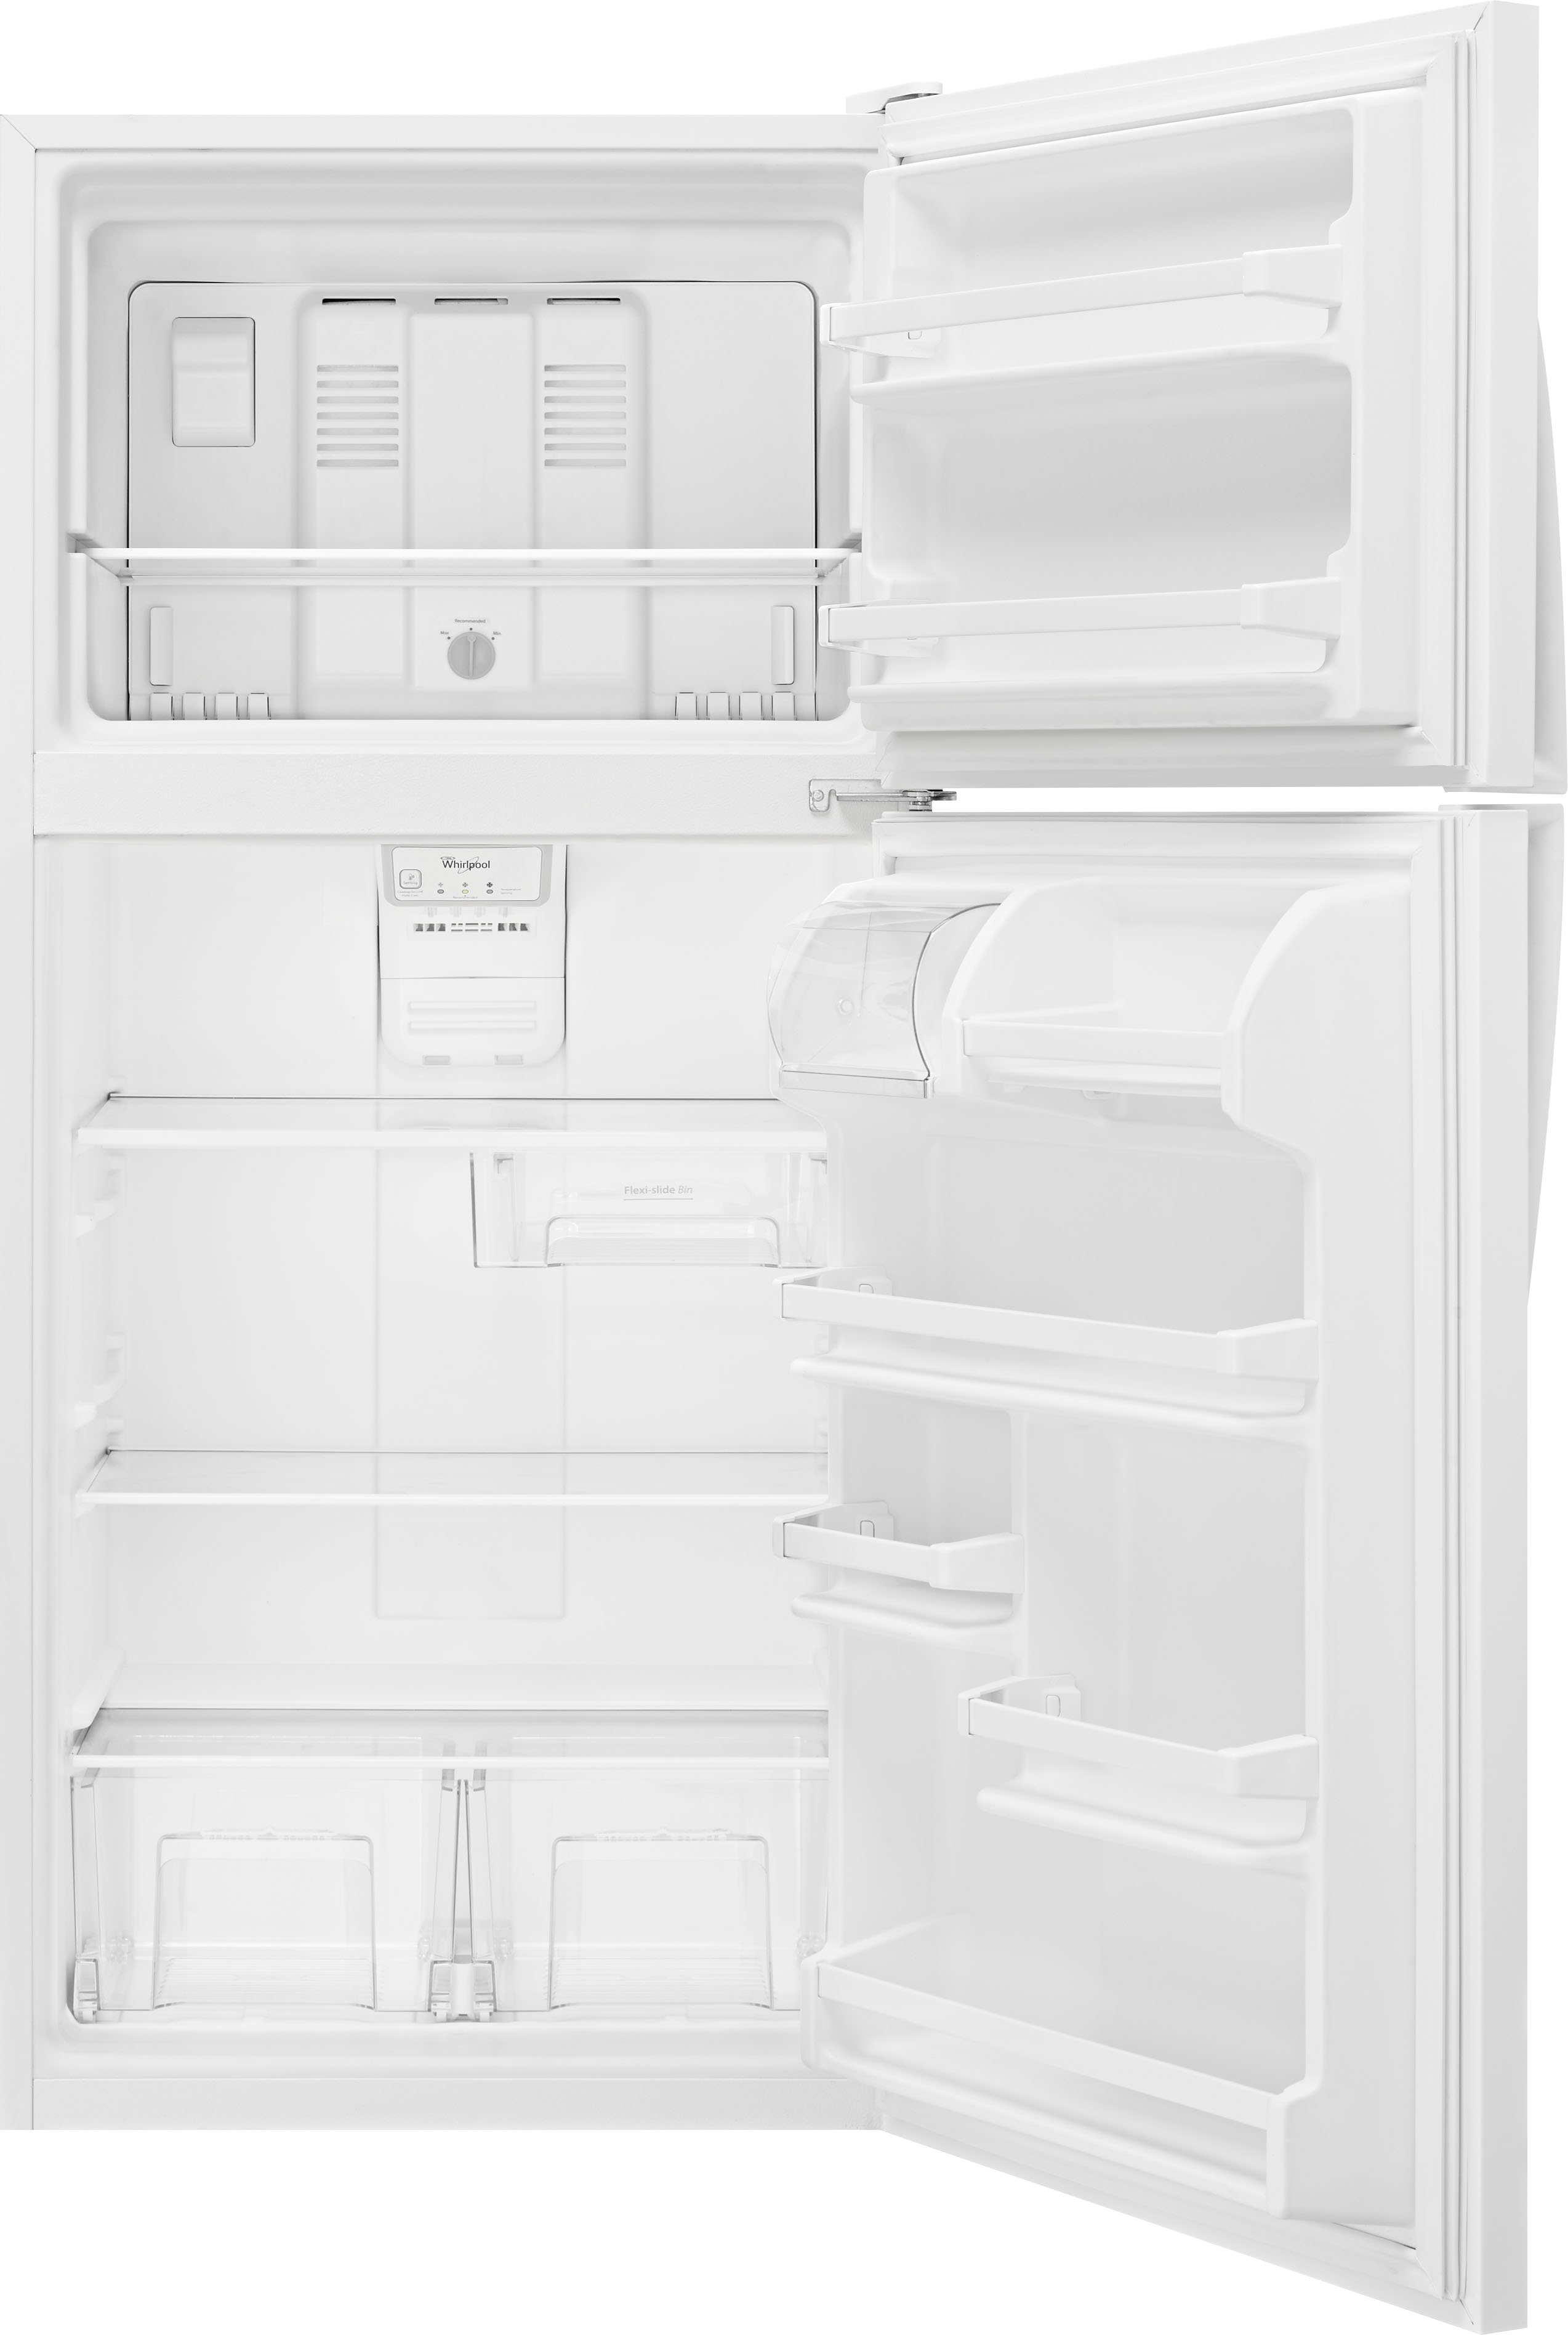 Whirlpool - 18.2 Cu. Ft. Top-Freezer Refrigerator - White